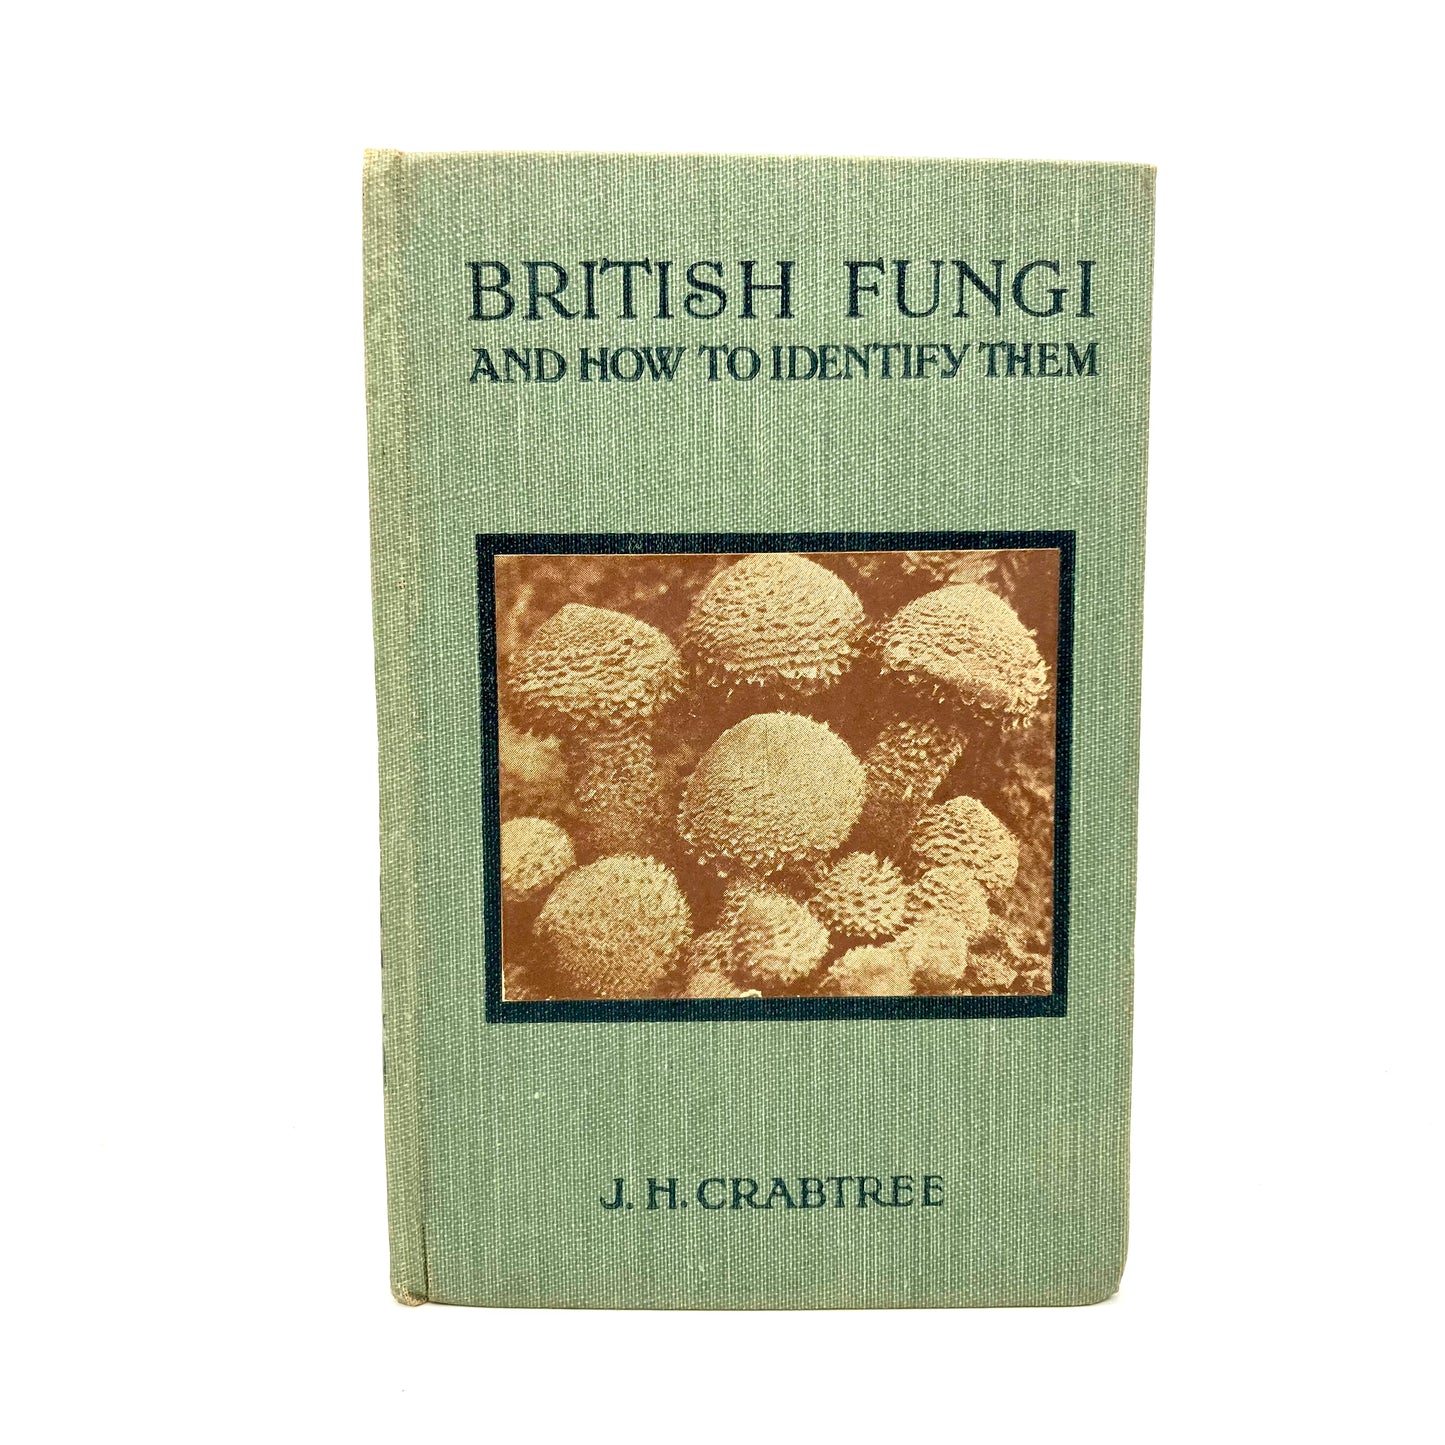 CRABTREE, J.H. "British Fungi and How to Identify Them" [The Epworth Press, c1916] - Buzz Bookstore